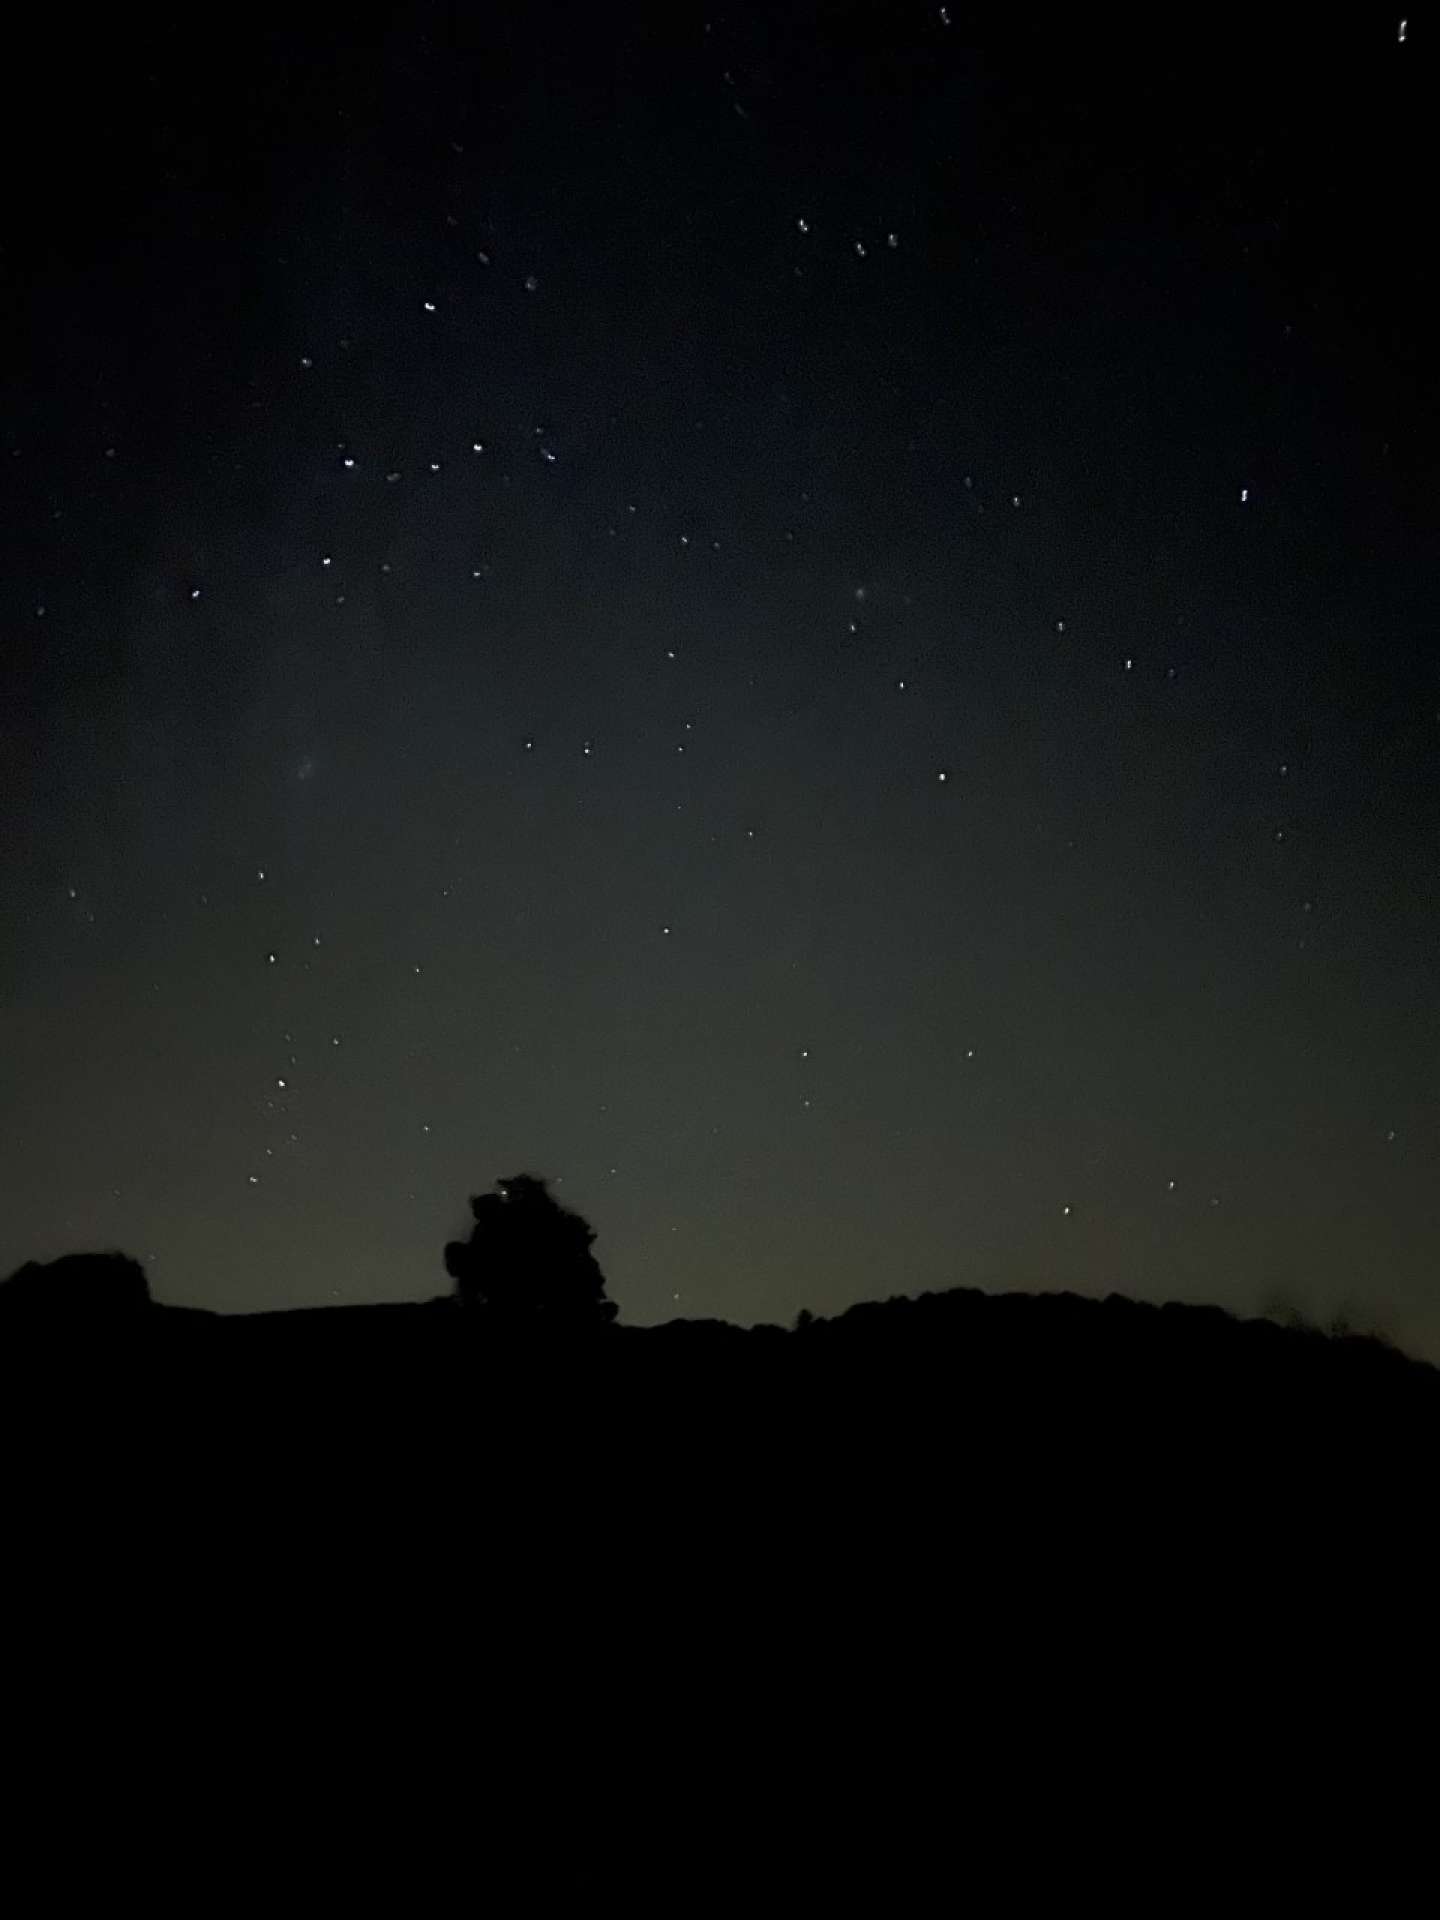 ...The starlit skies at night.